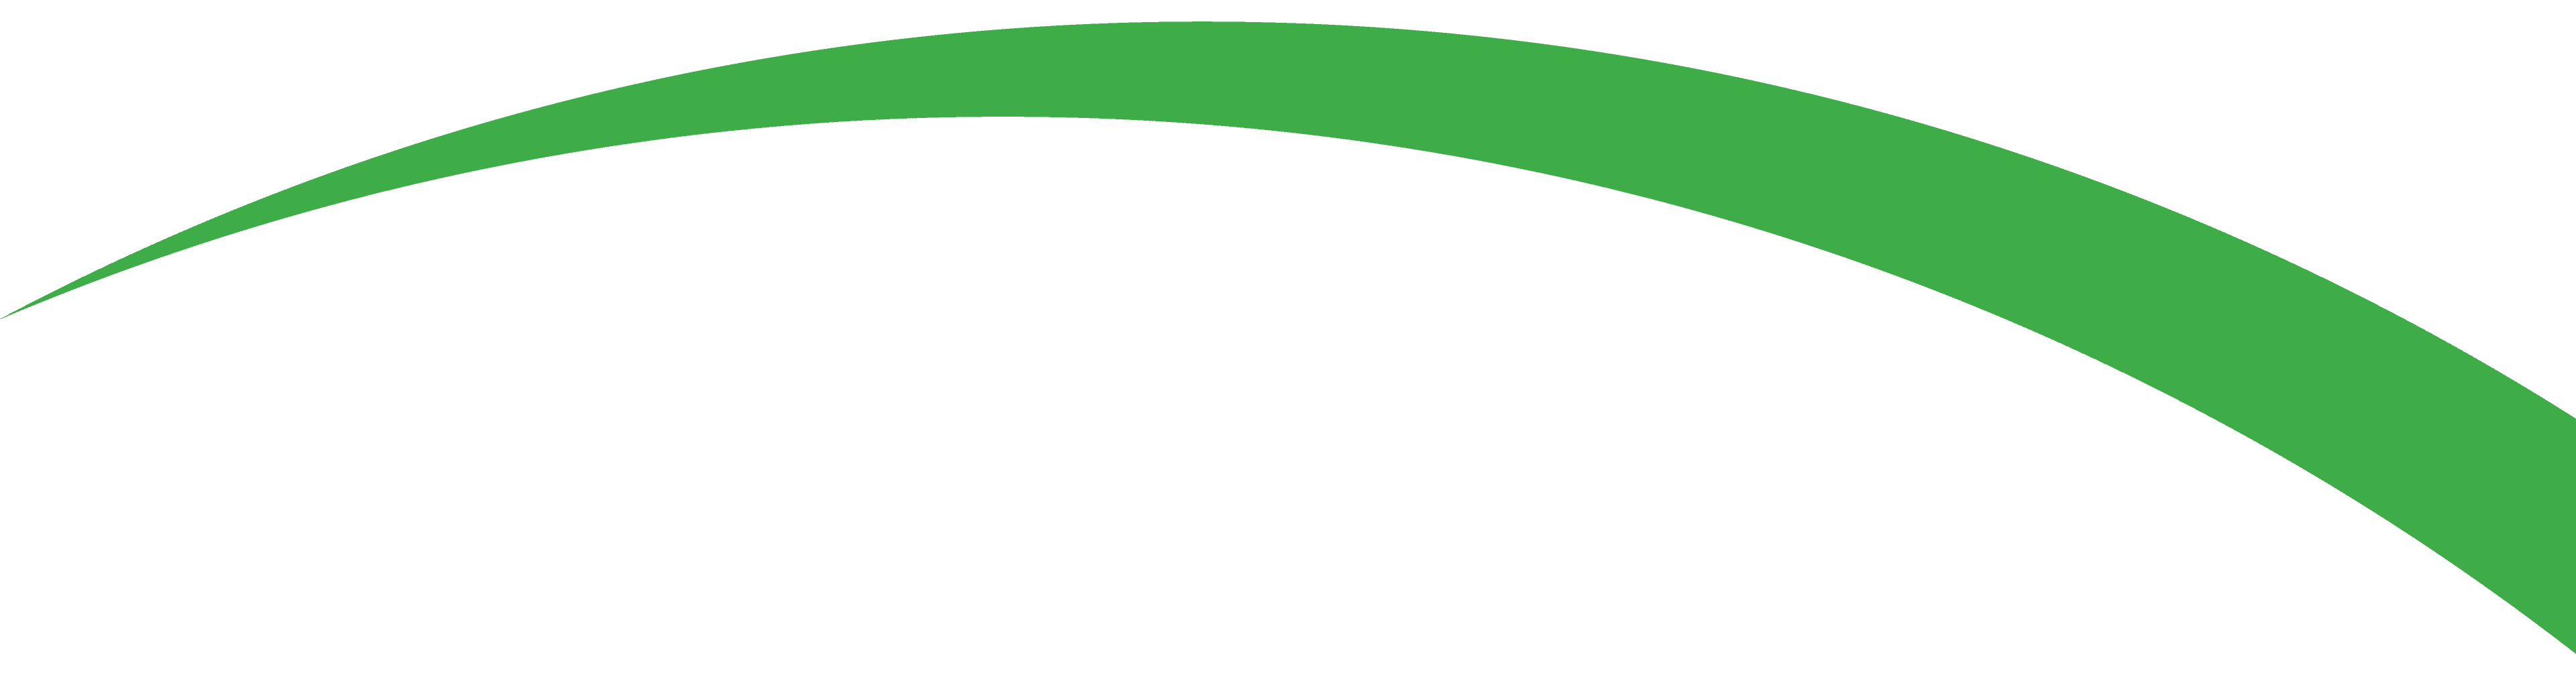 Green arch